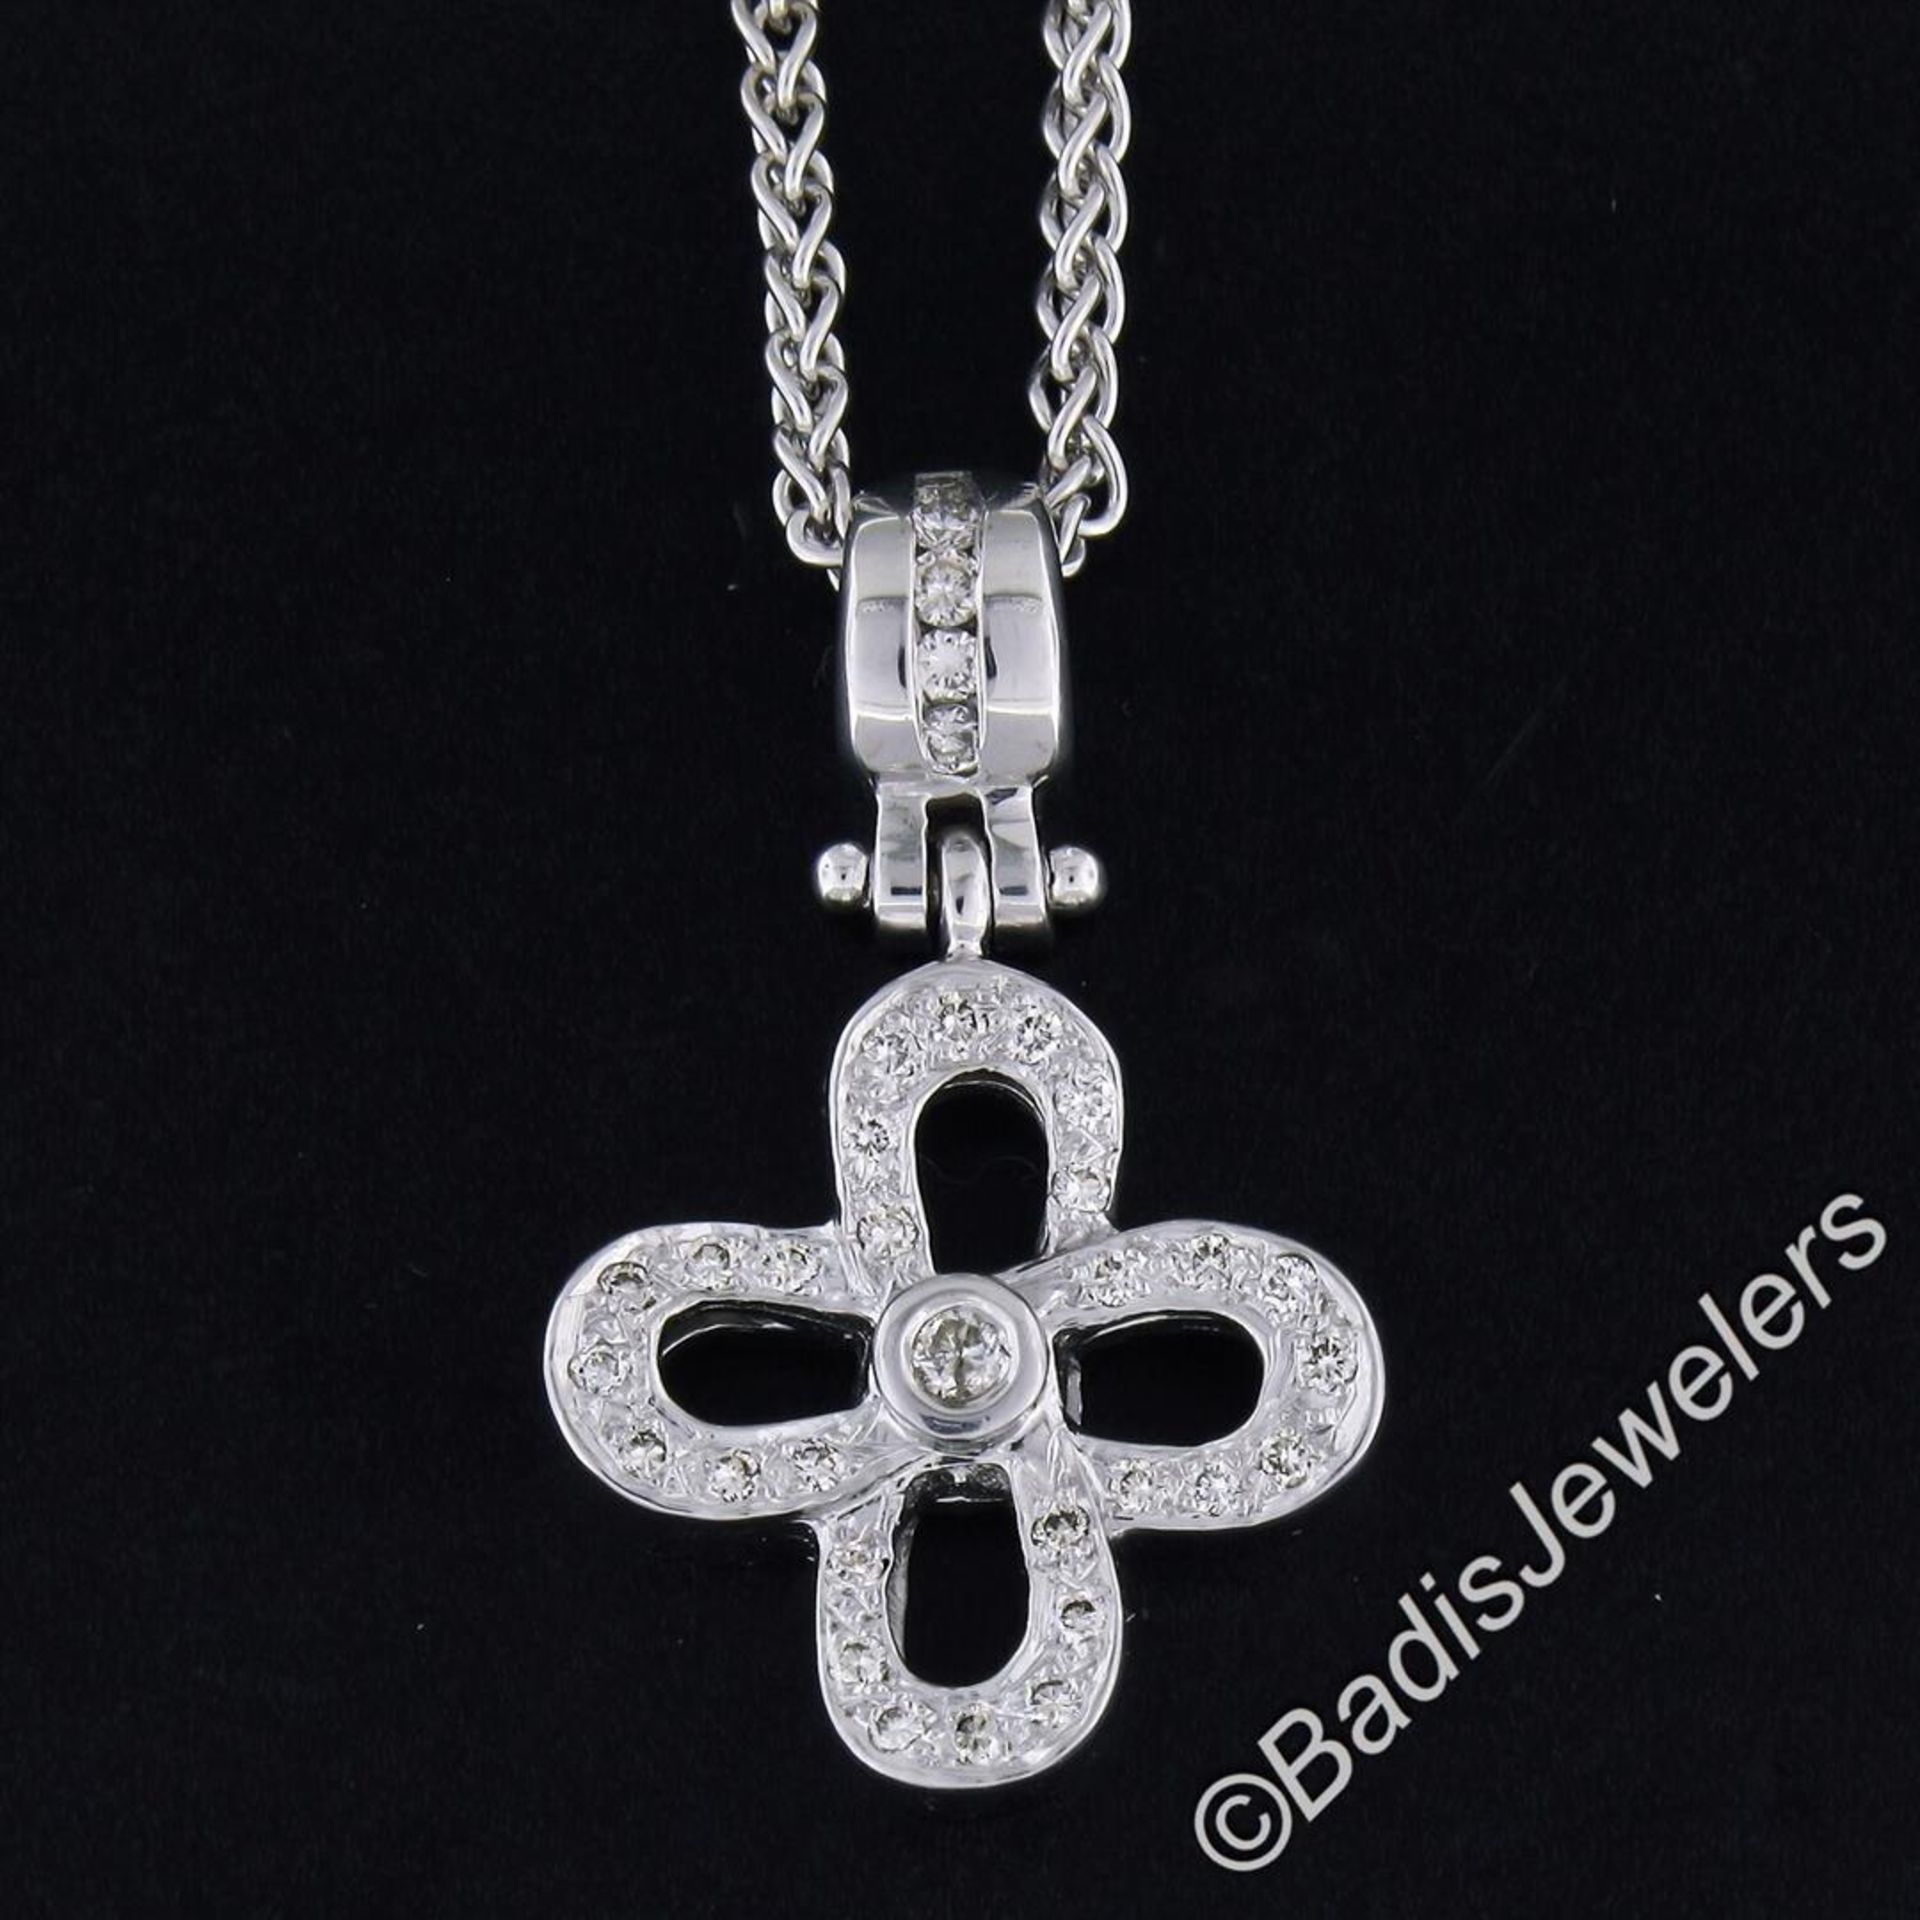 14kt White Gold 0.44 ctw Diamond Open Flower Pendant Necklace - Image 8 of 8